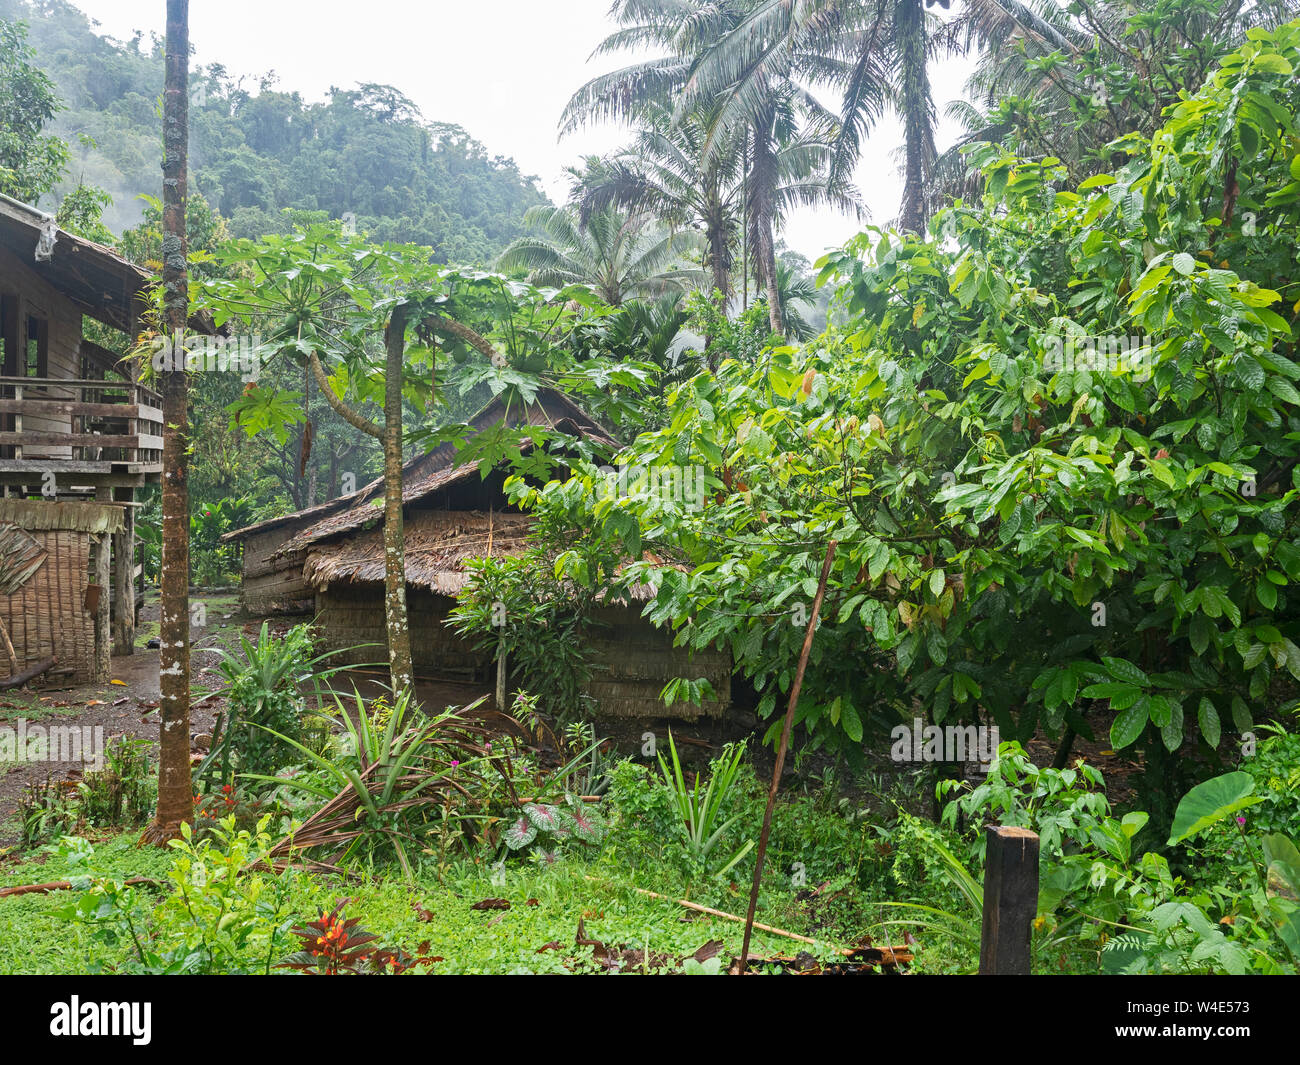 Wald Garten Obst und Gemüse angebaut werden, einschließlich Kumara, Taro, Bananen, frühlingszwiebeln etc Nara, Makira Insel, die Salomonen, South Paci Stockfoto